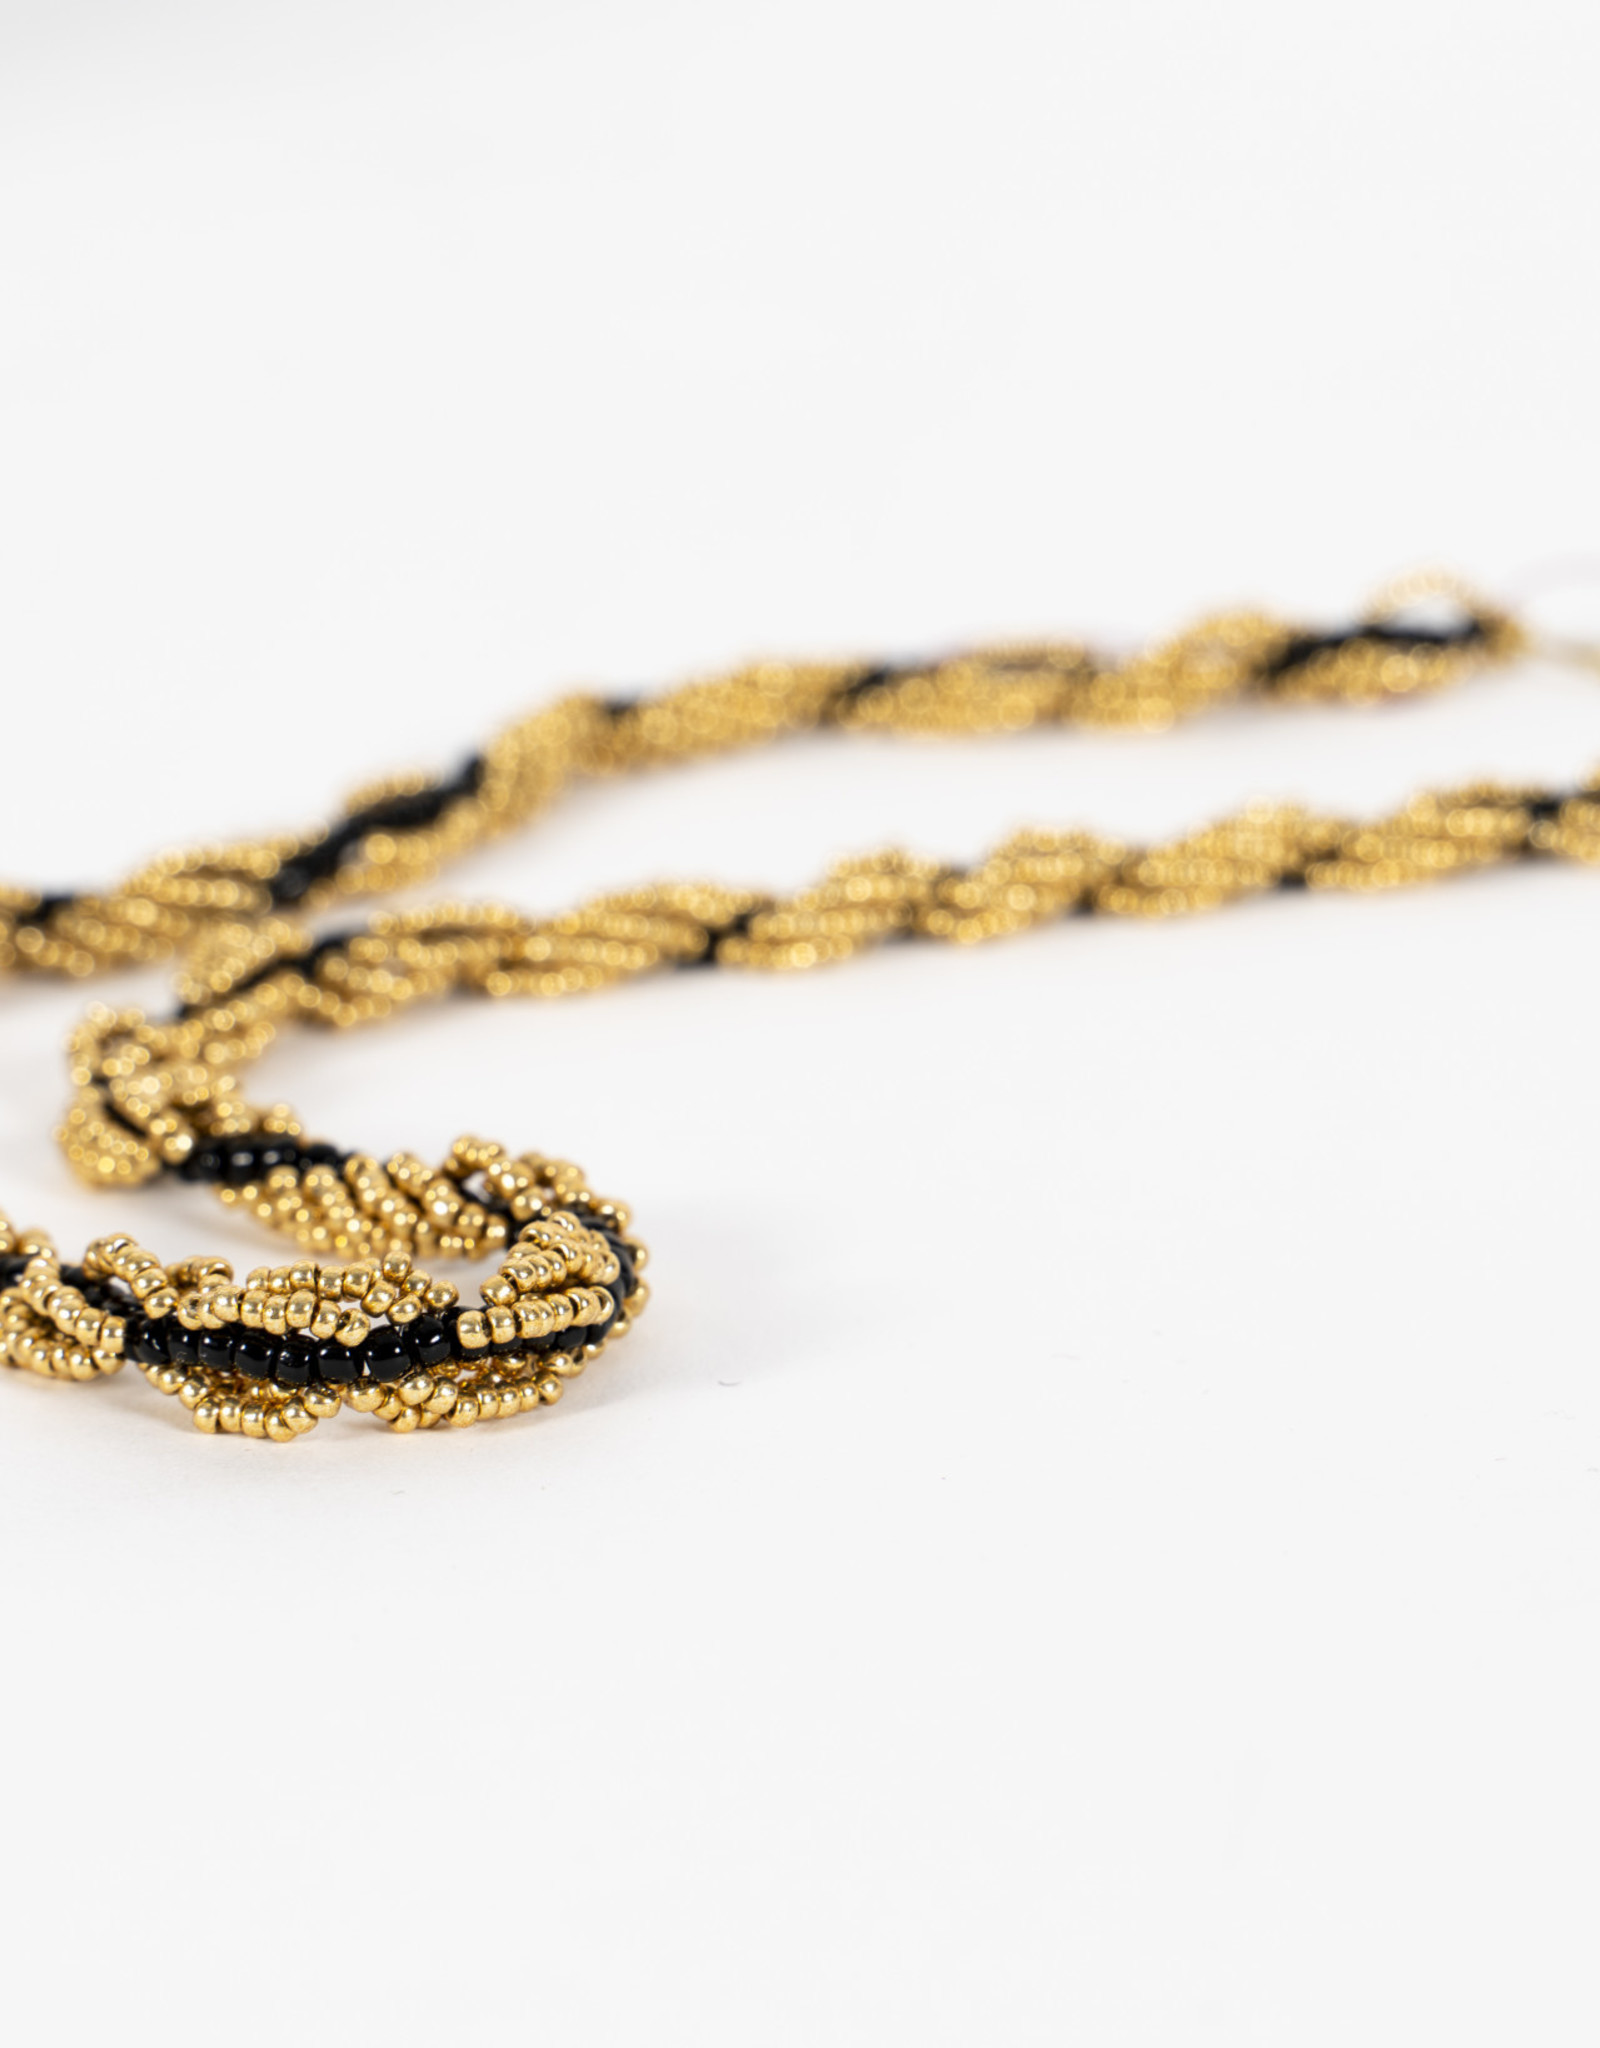 Wendy Ellsworth Black/Gold spiral necklace